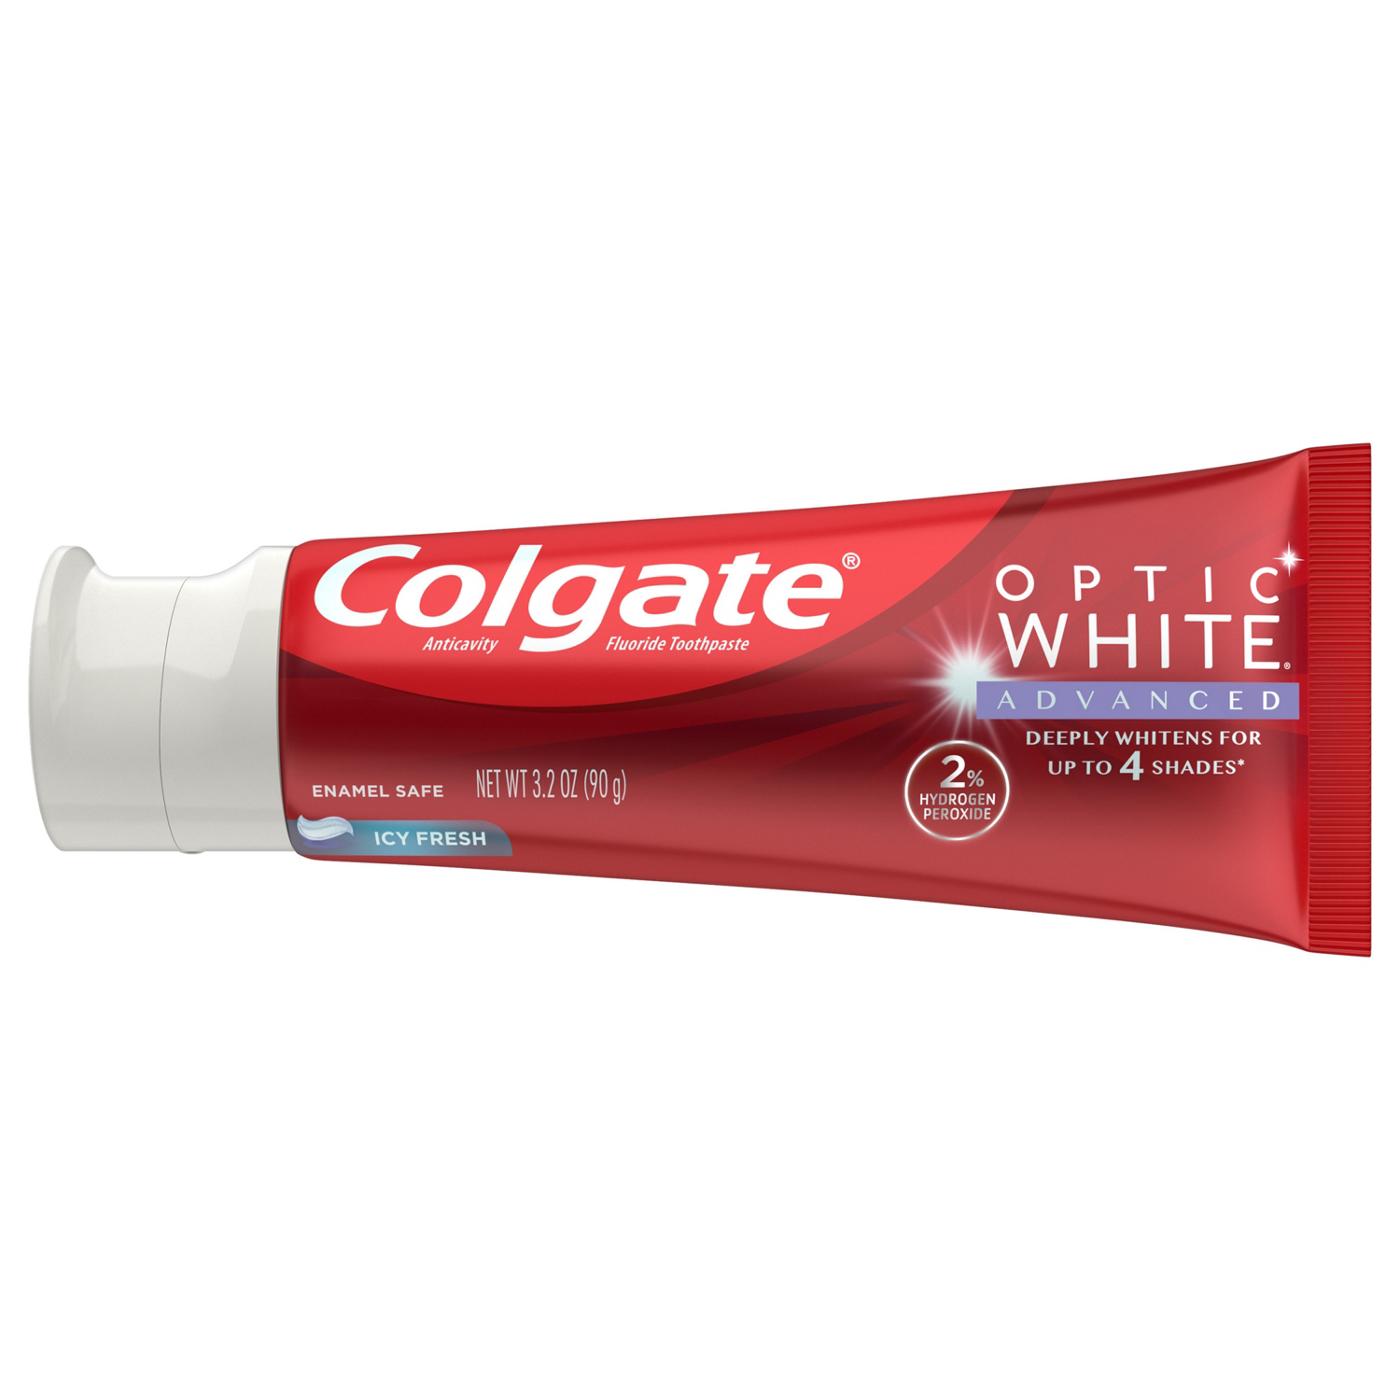 Colgate Optic White Advanced Anticavity Toothpaste - Icy Fresh, 2 Pk; image 7 of 9